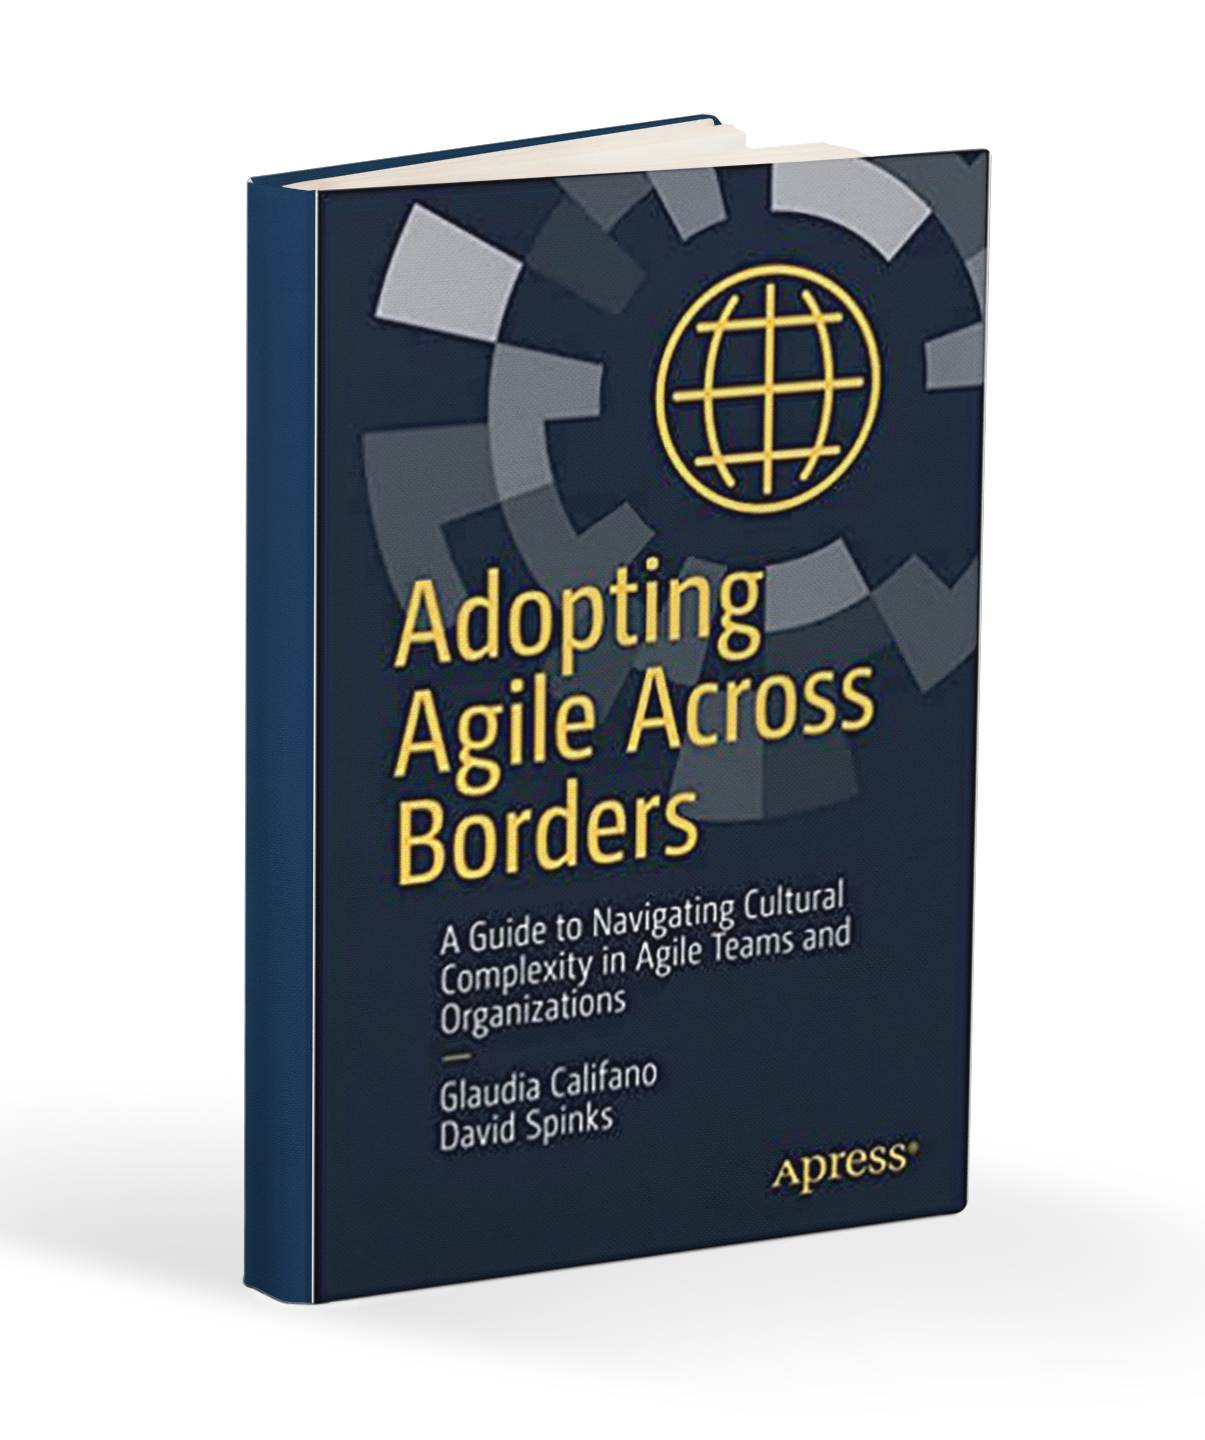 scrum book recommendation: adopting agile across borders